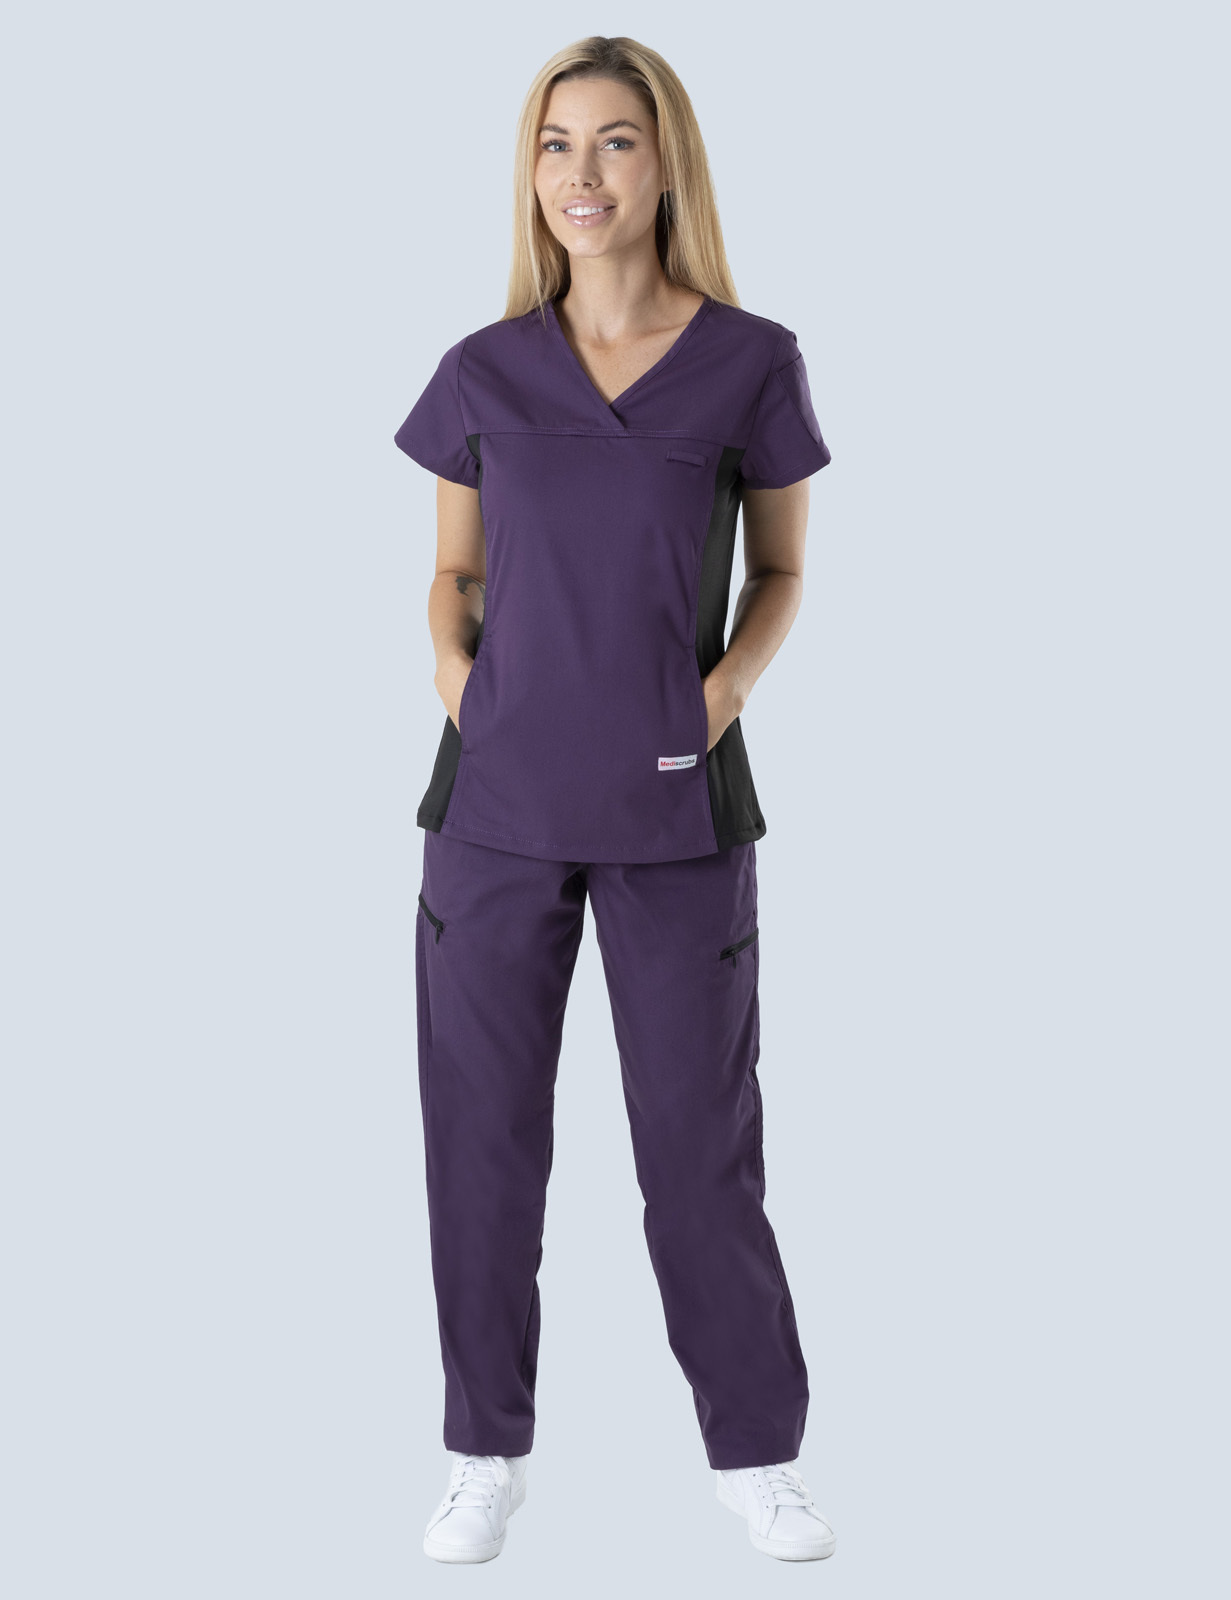 Redland Hospital Birth Suite Uniform Set Bundle (Women's Fit Spandex Top and Cargo Pants in Aubergine incl Logo)